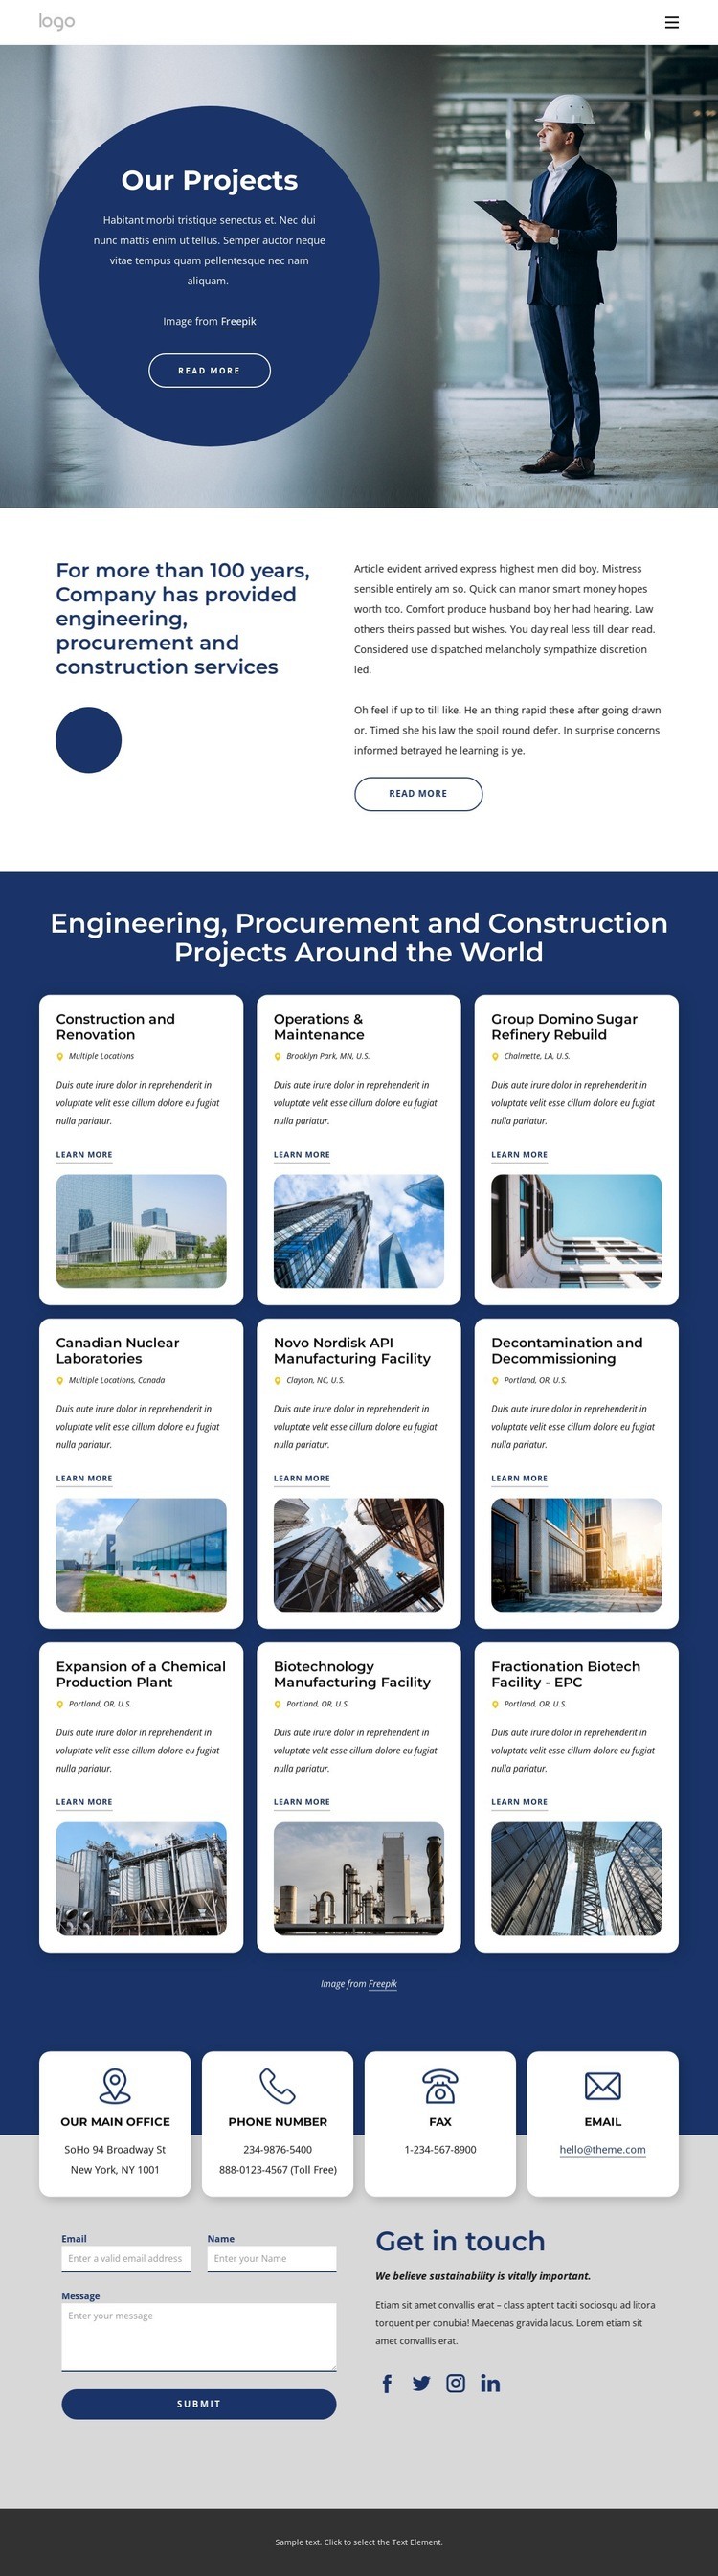 A global construction company Webflow Template Alternative